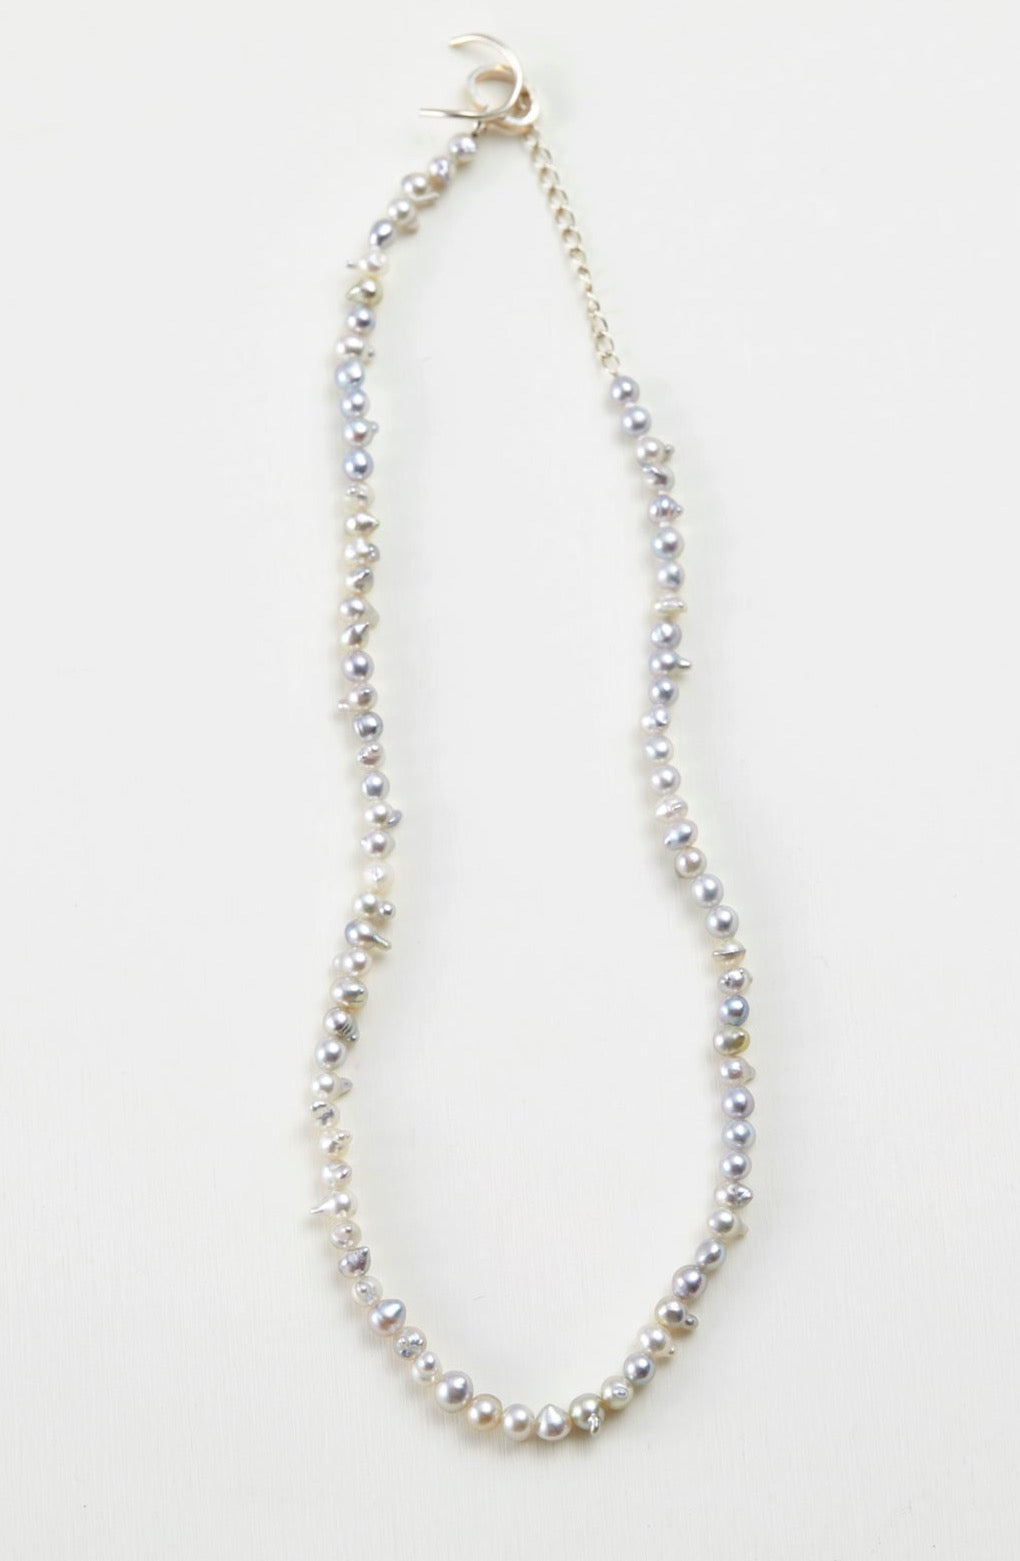 Spiky Akoya pearl necklace